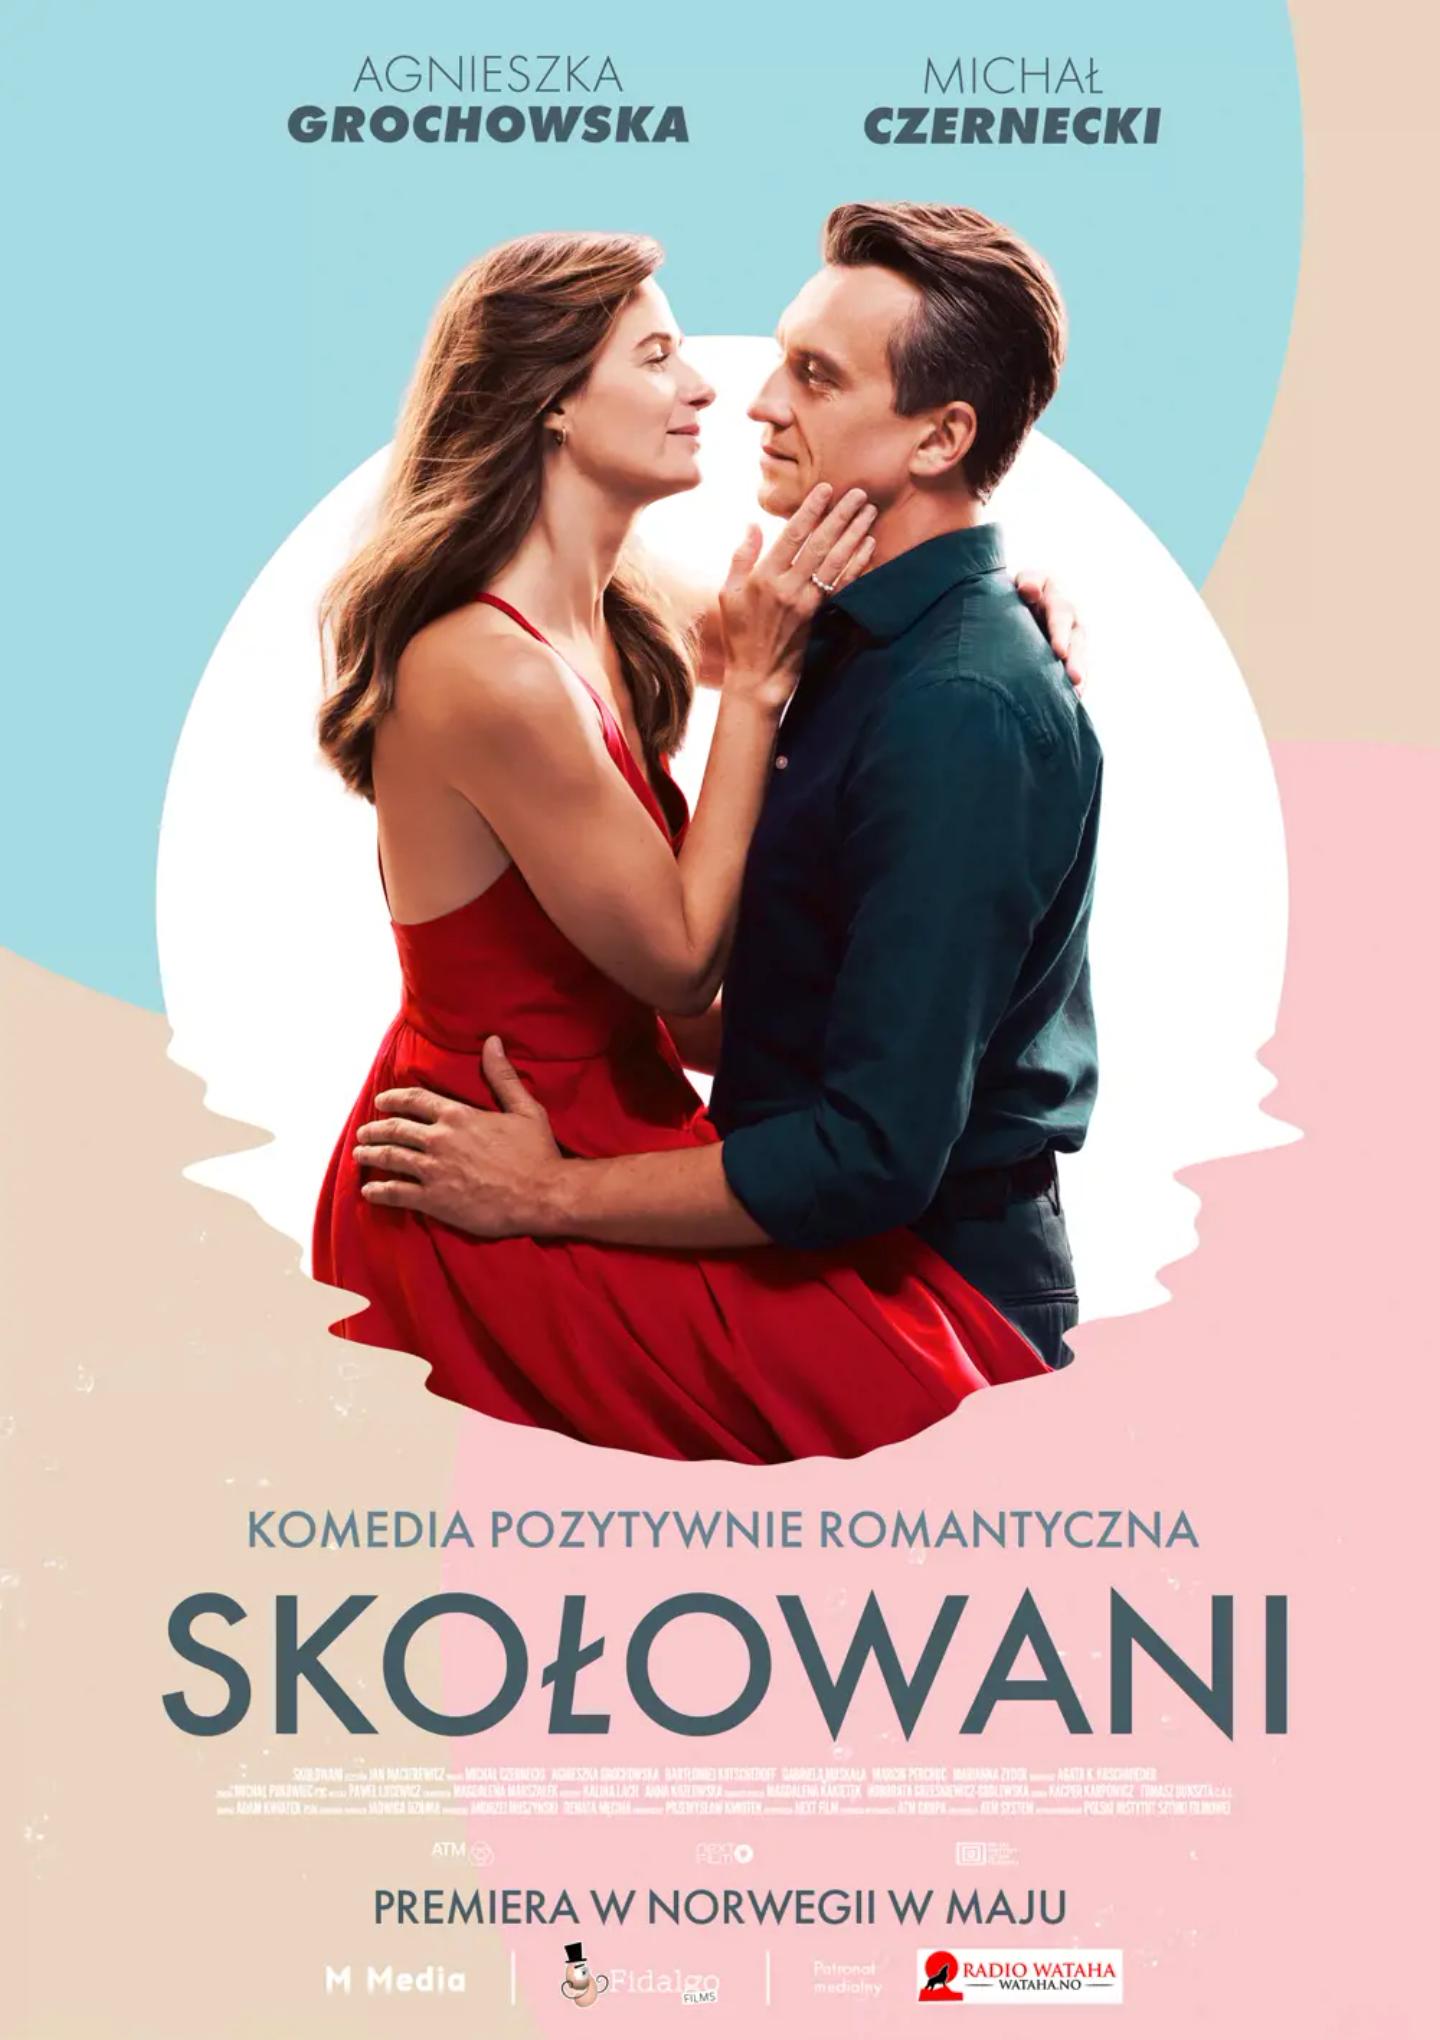 Plakat for 'Skołowani'